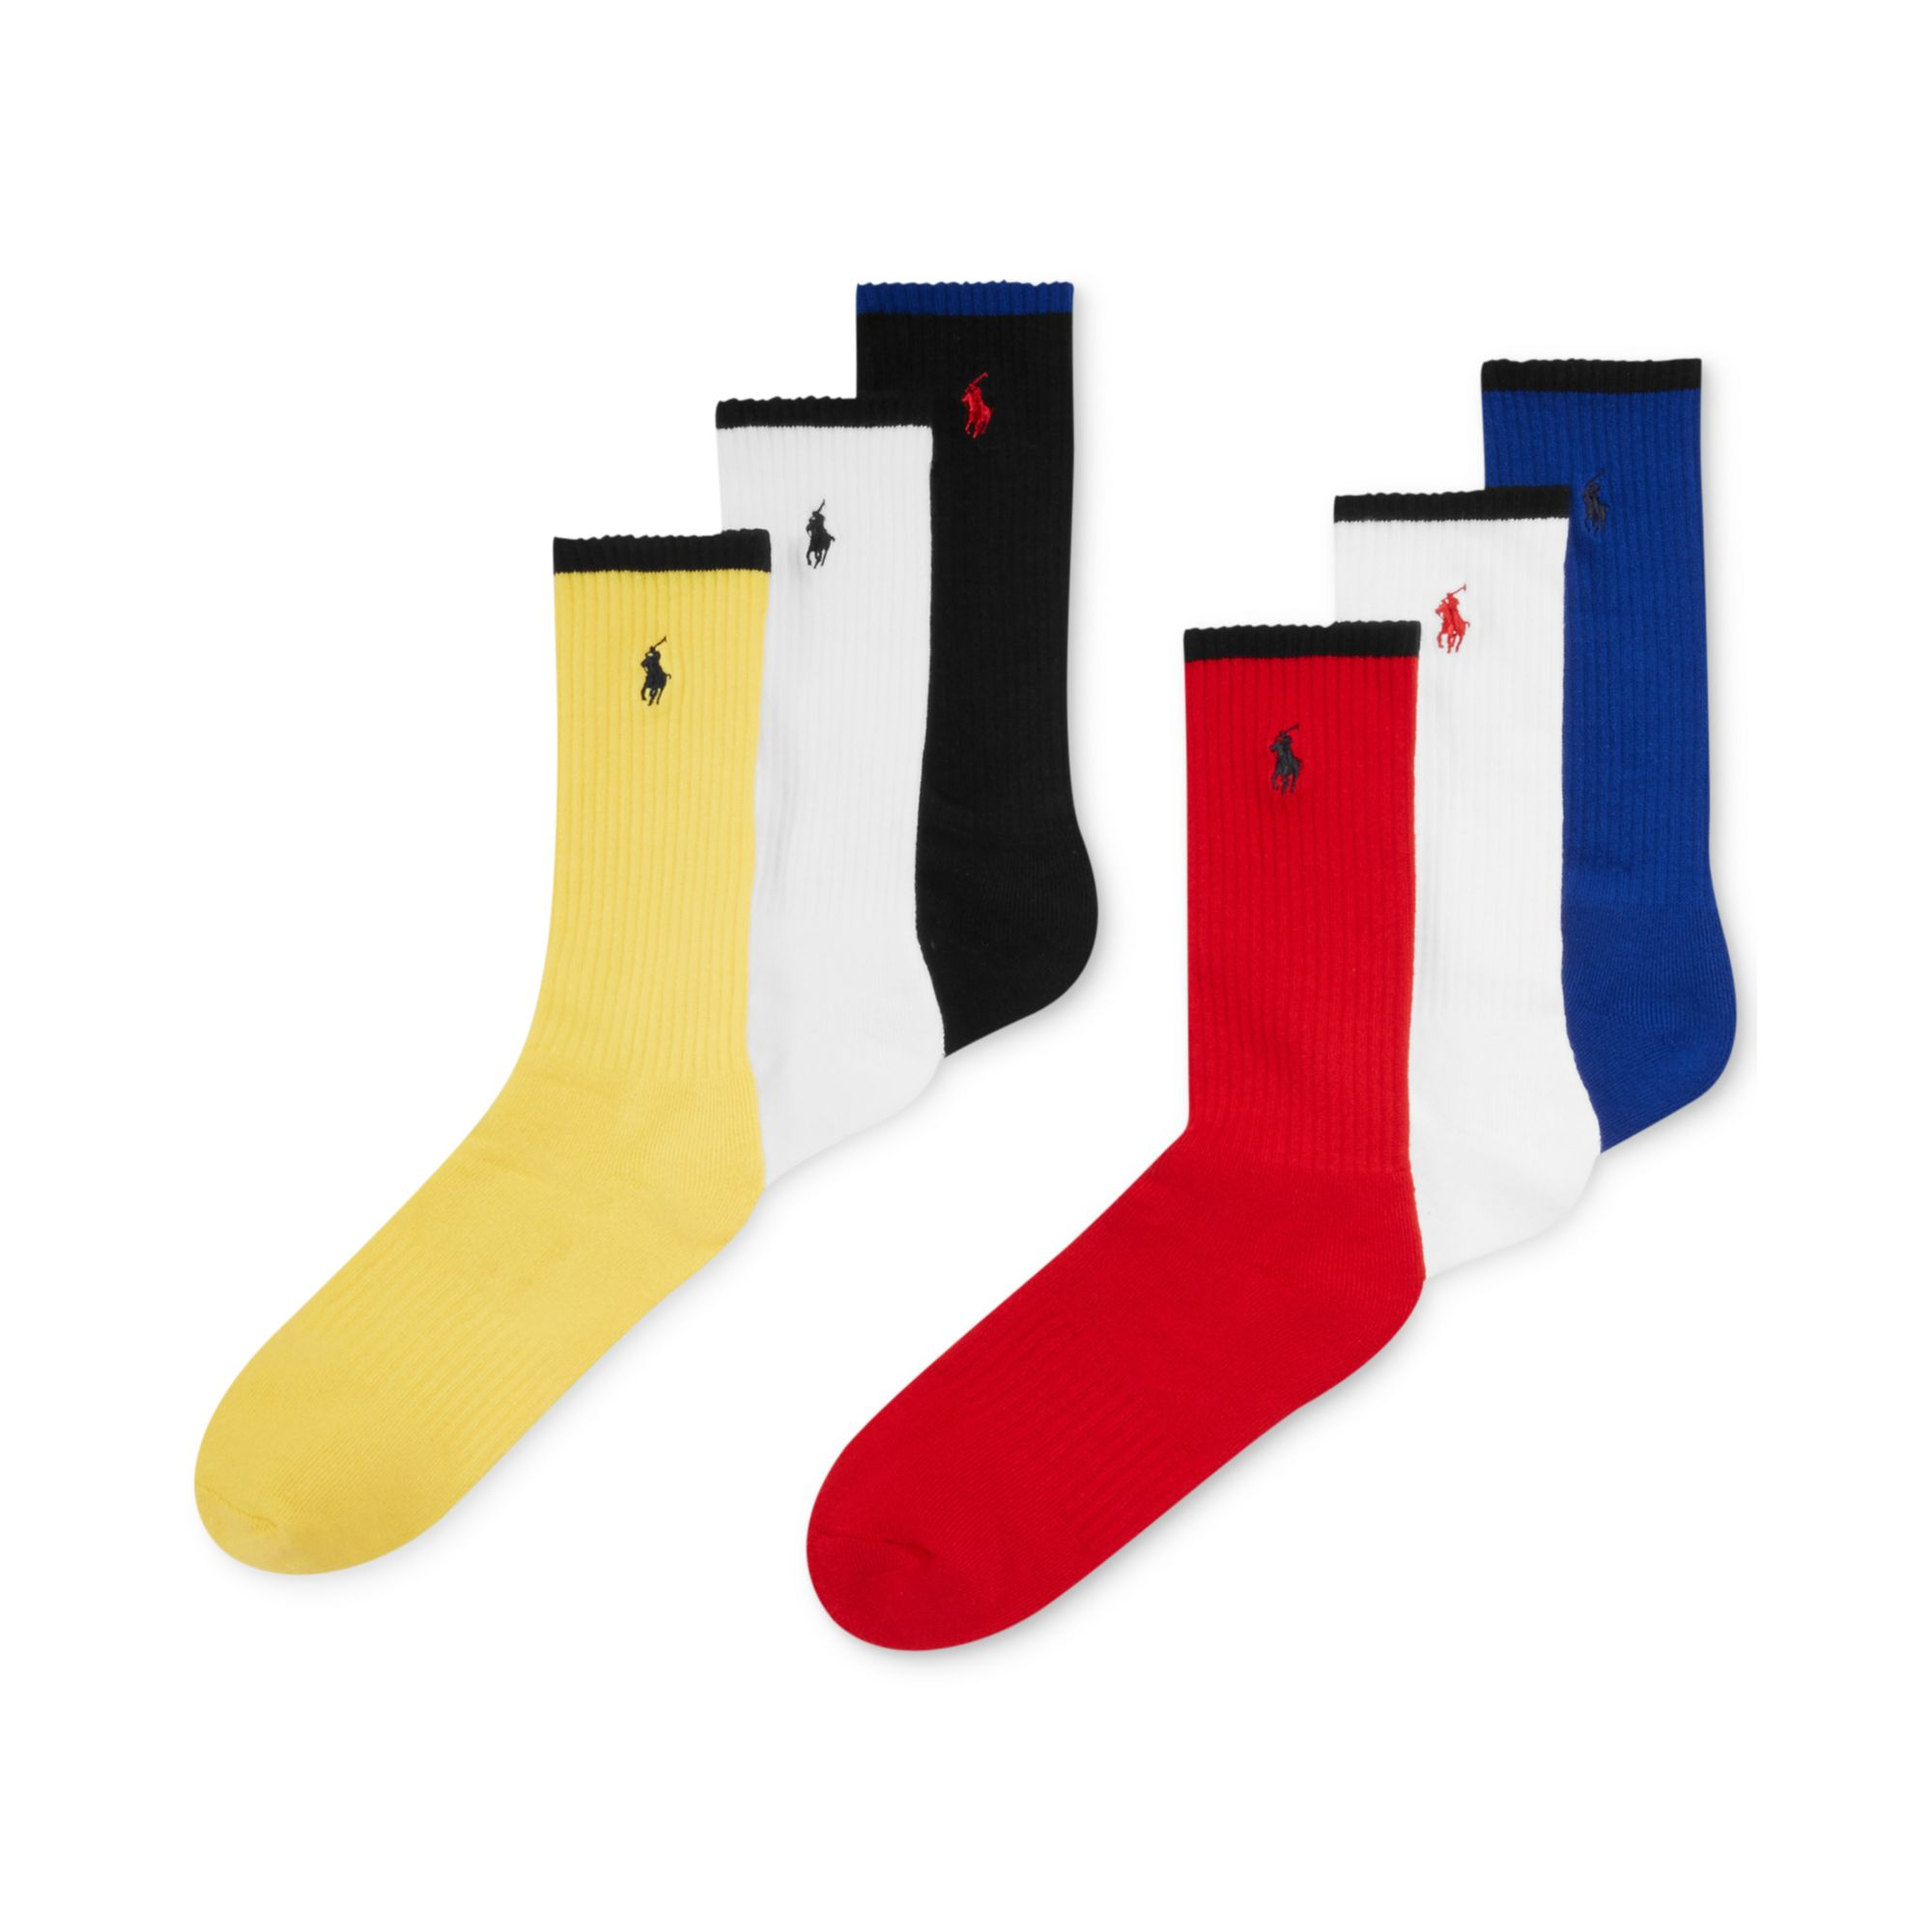 Ralph Lauren Polo Mens Assorted Colors Crewlength Socks 6pack for Men